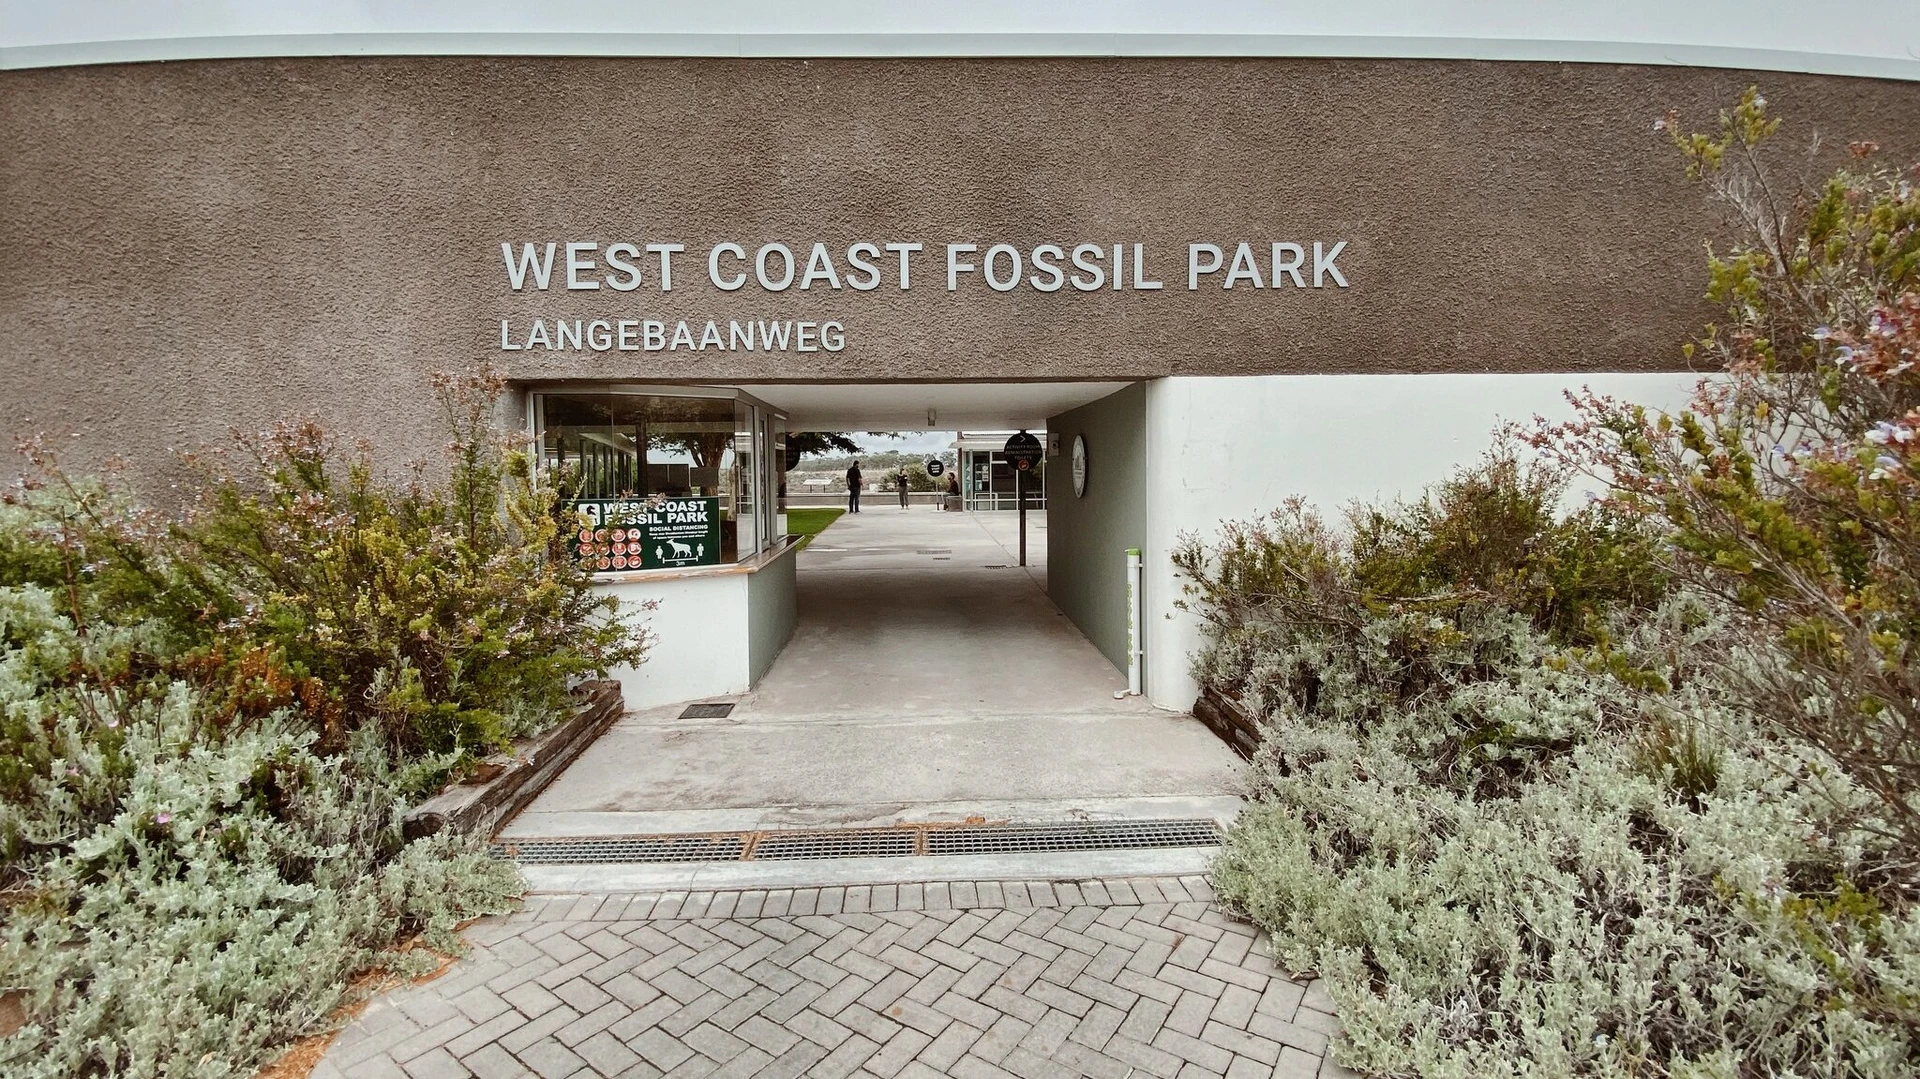 The West Coast Fossil Park